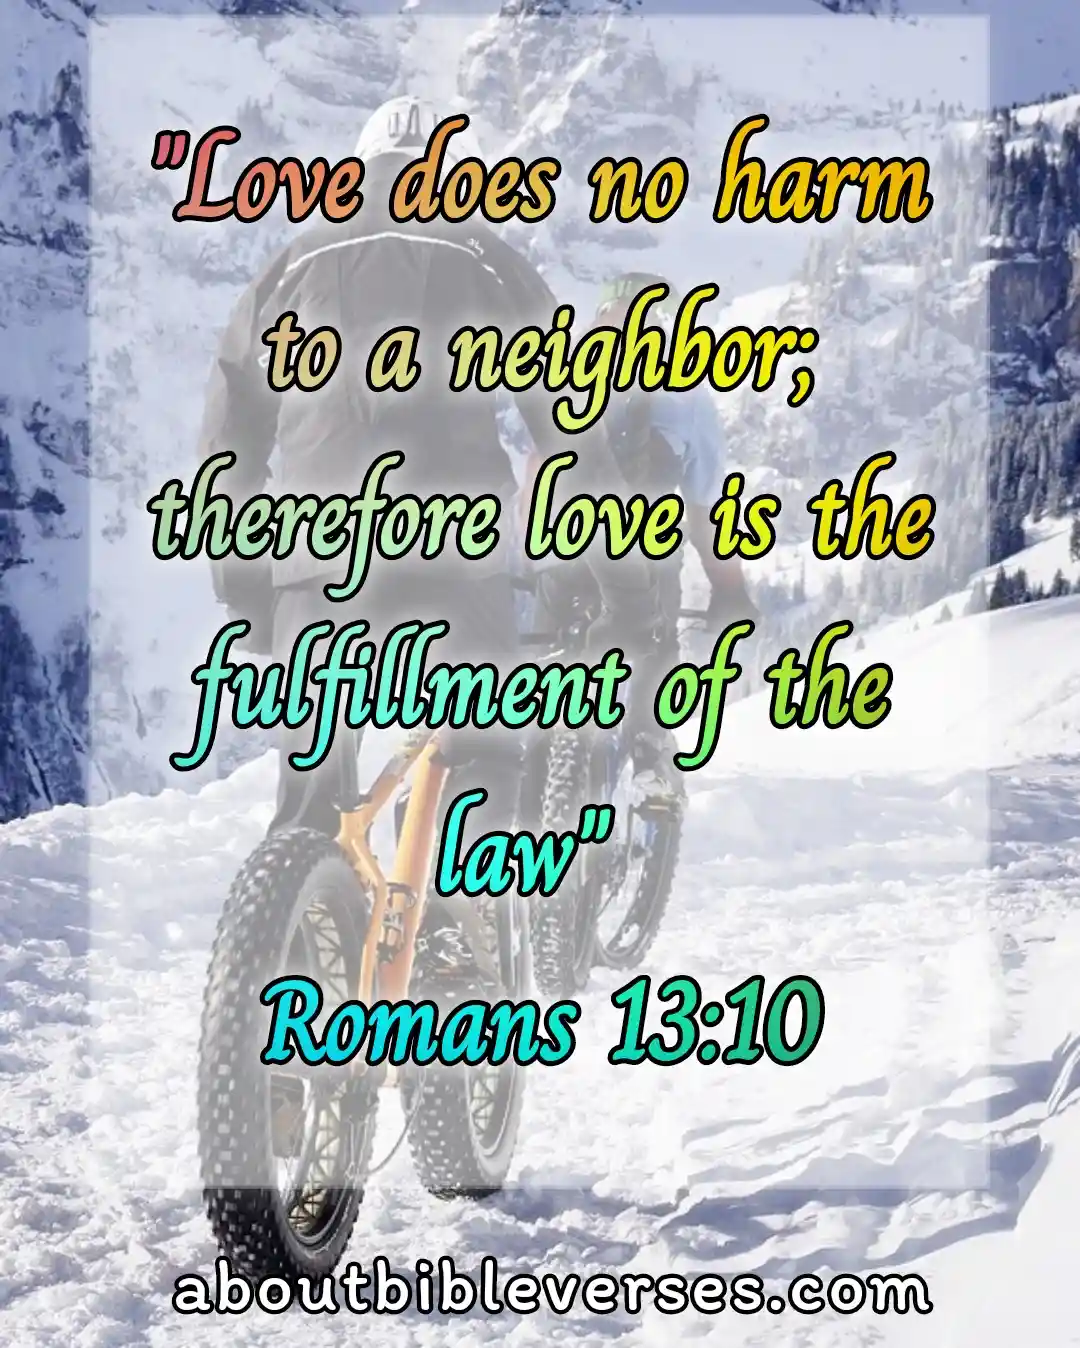 today bible verse (Romans 13:10)